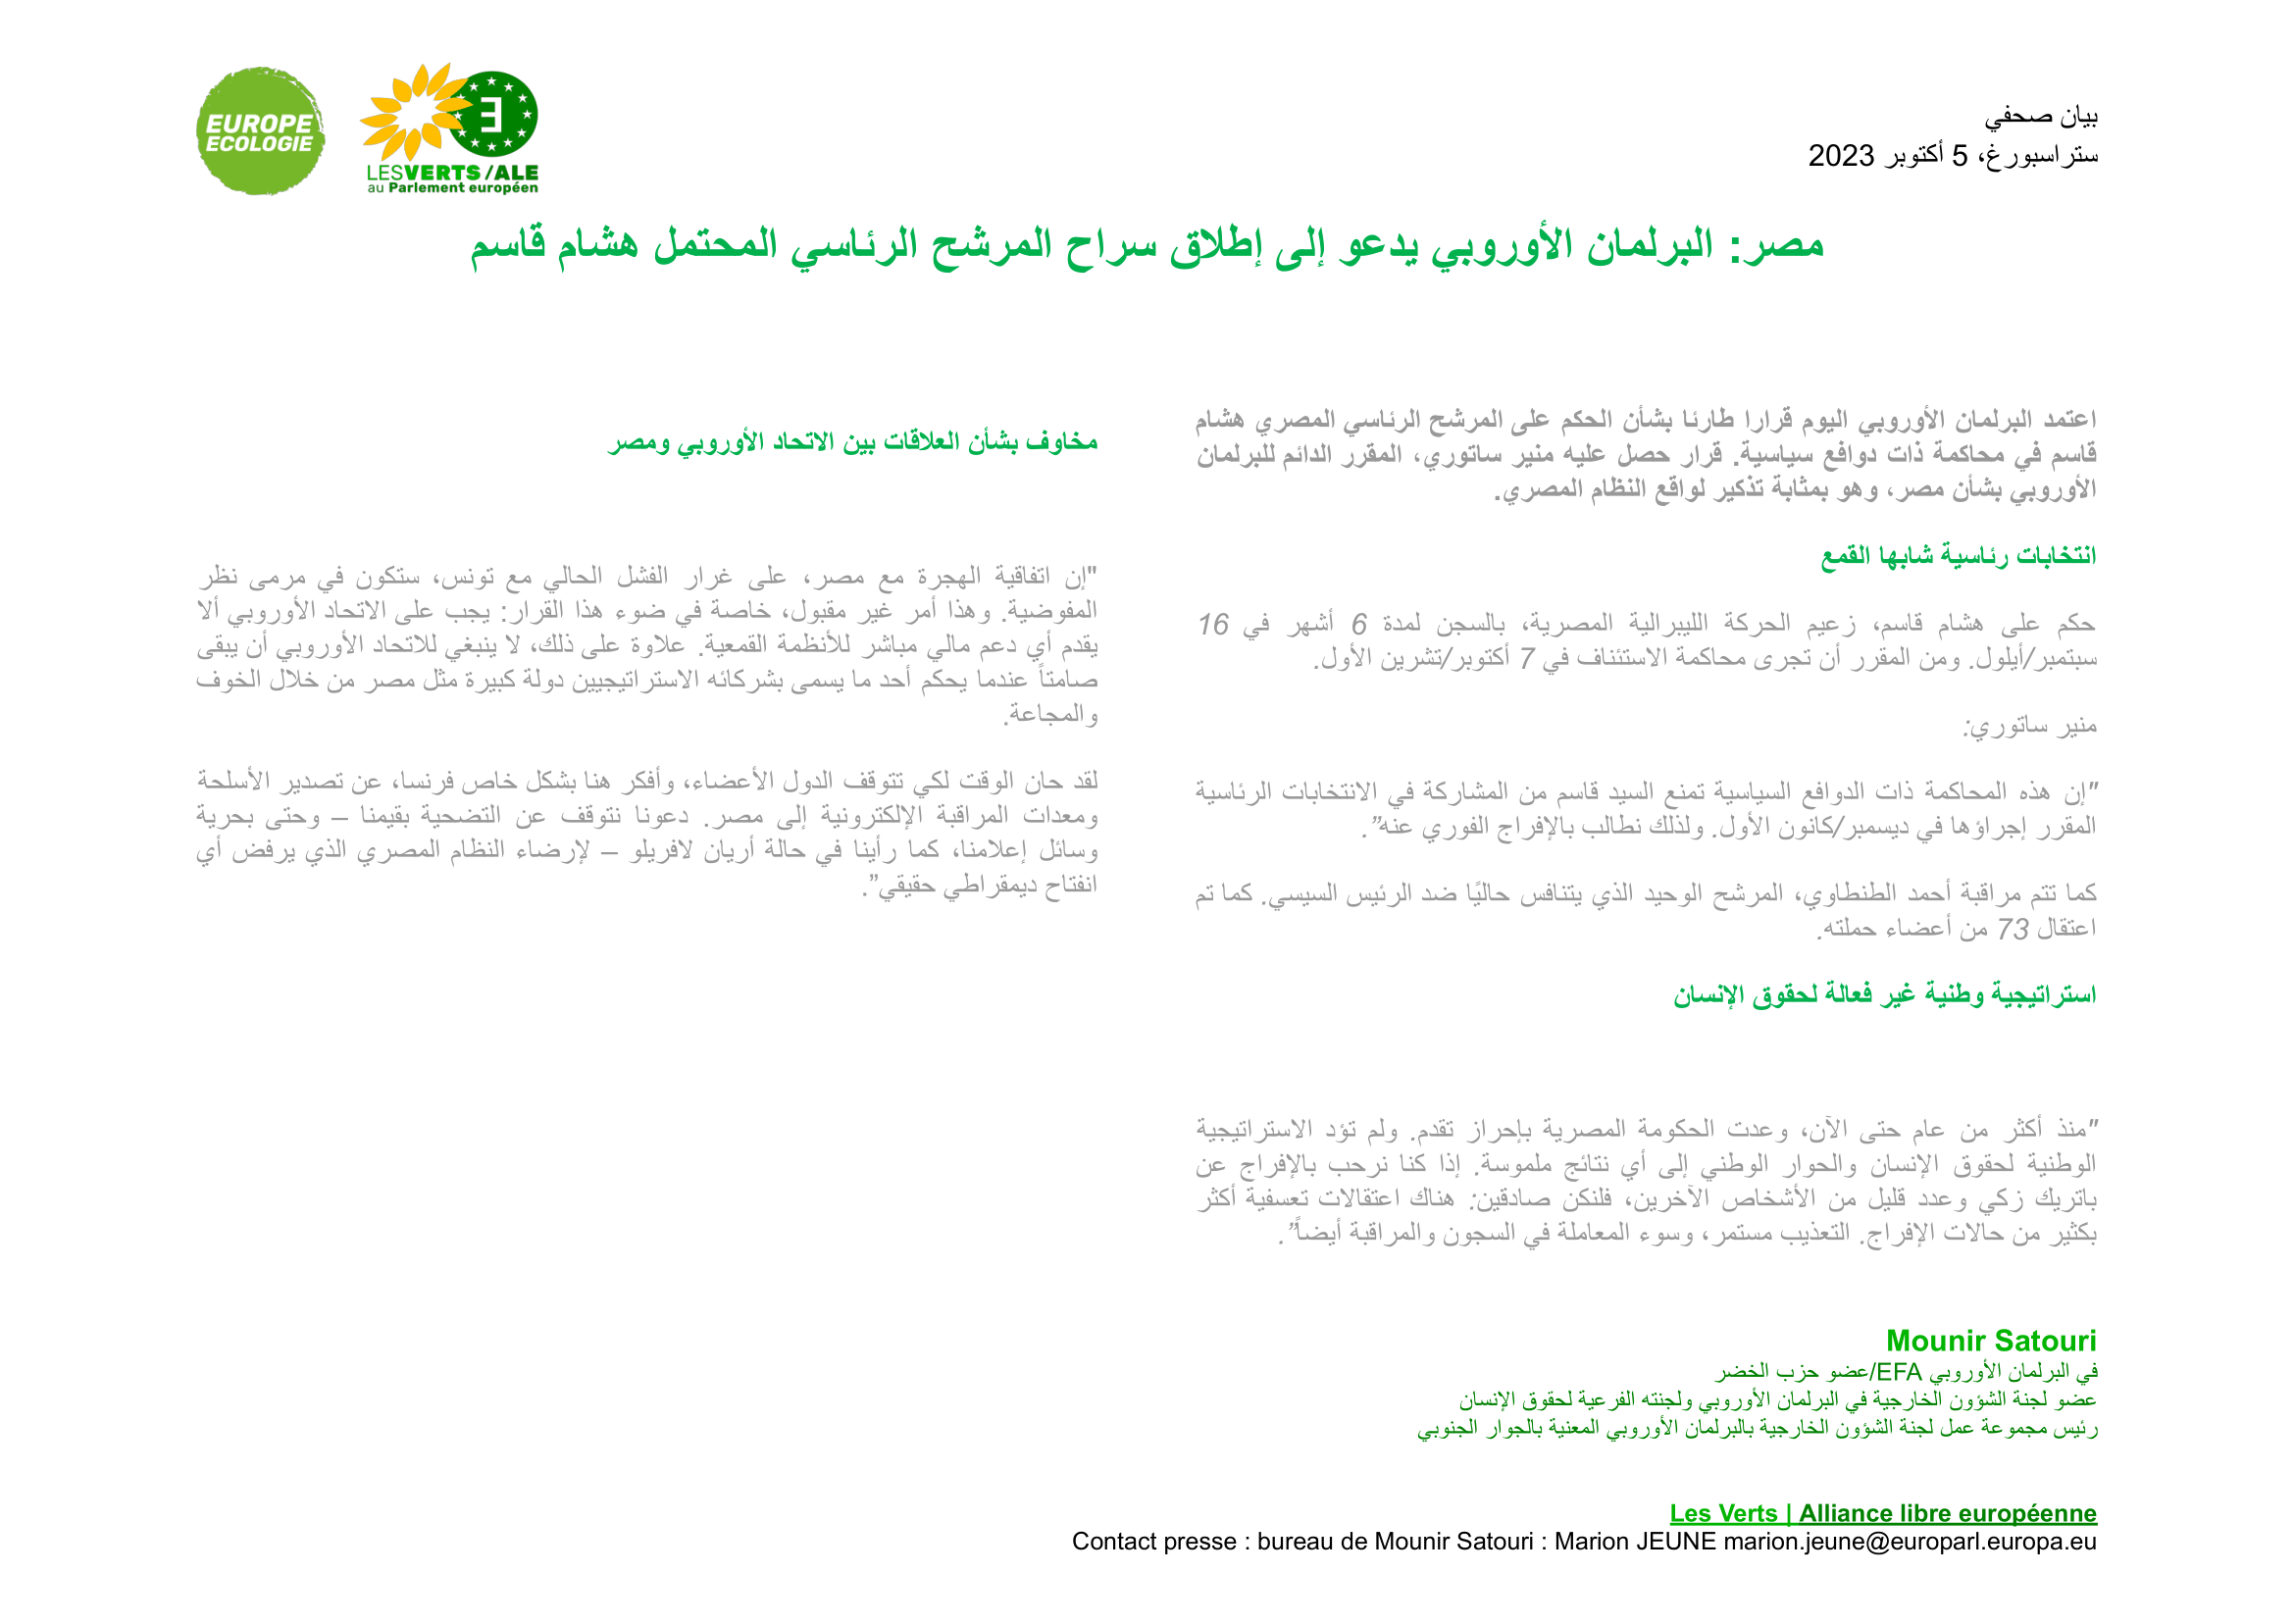 Press release in Arabic